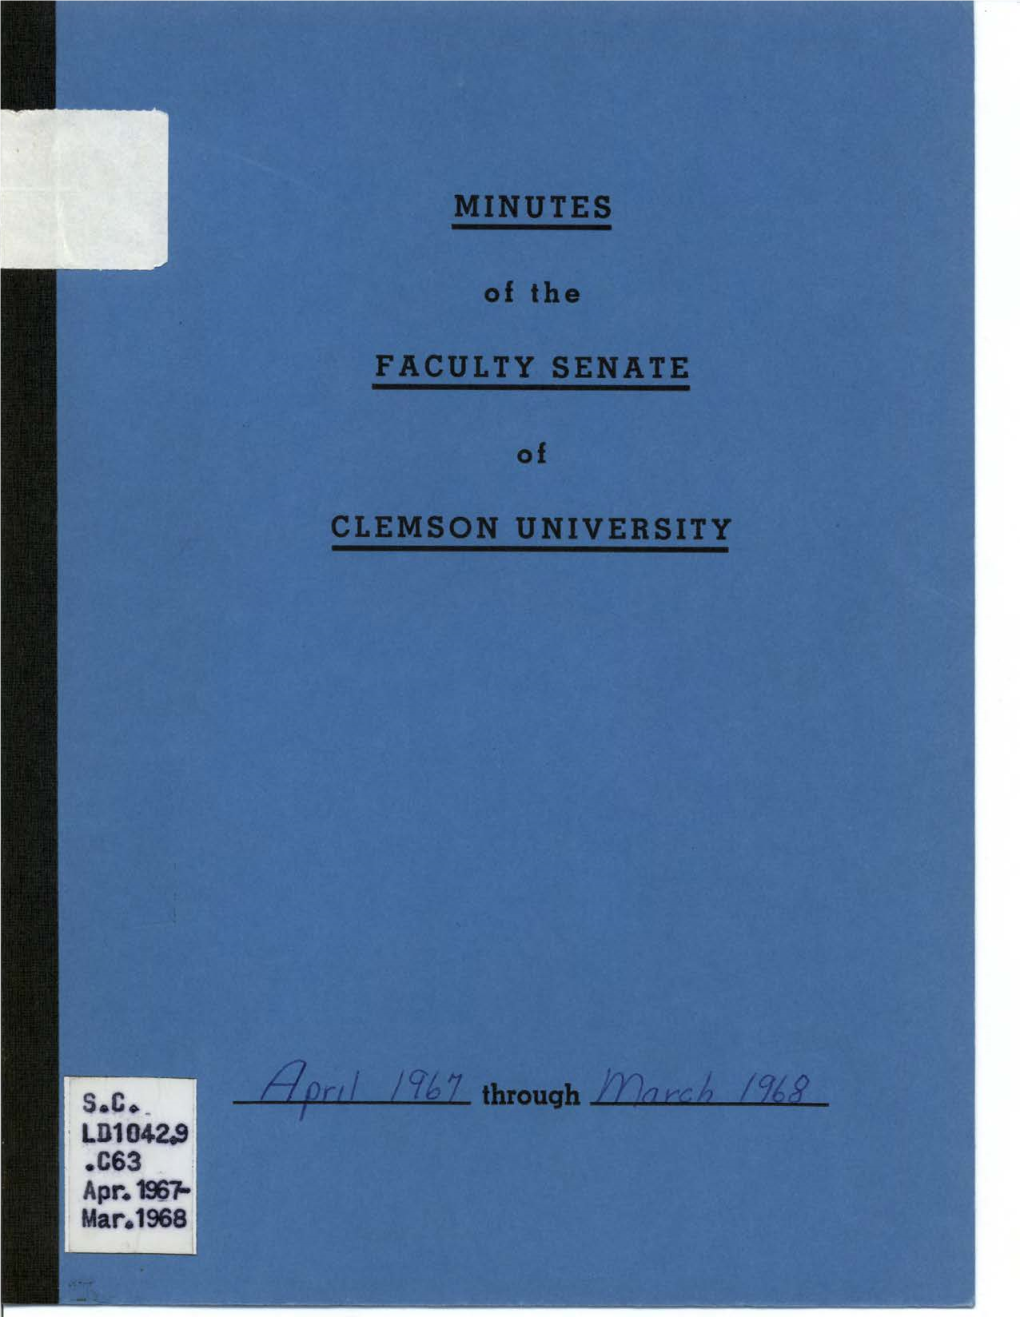 Faculty Senate Minutes, April 1967